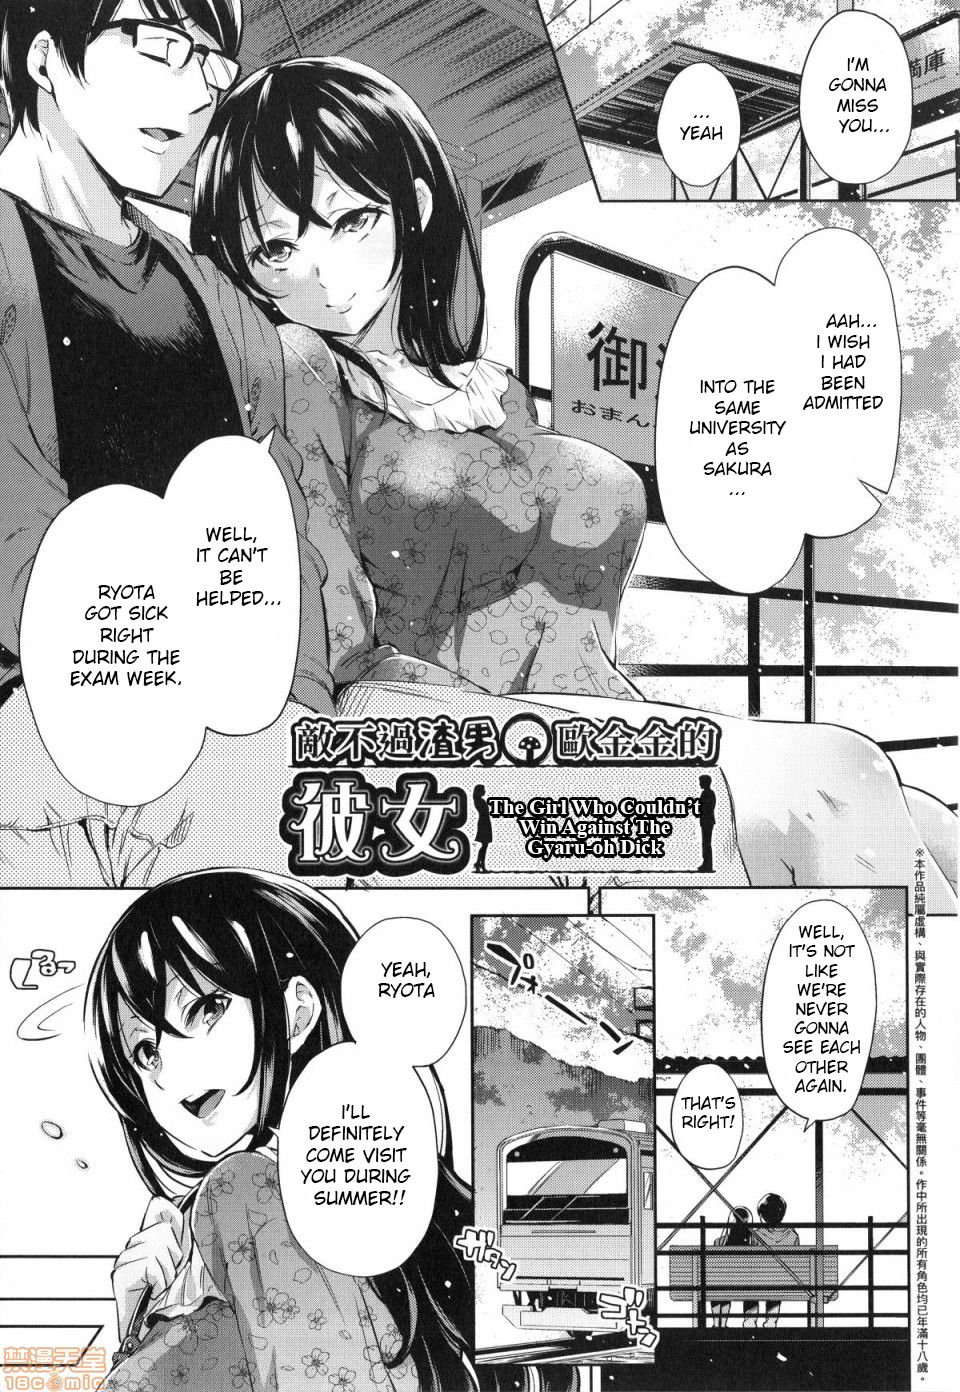 hentai manga gyaru-oh chinchin ni katenakatta kanojo / the girl who couldn't win against the gyaru-oh dick